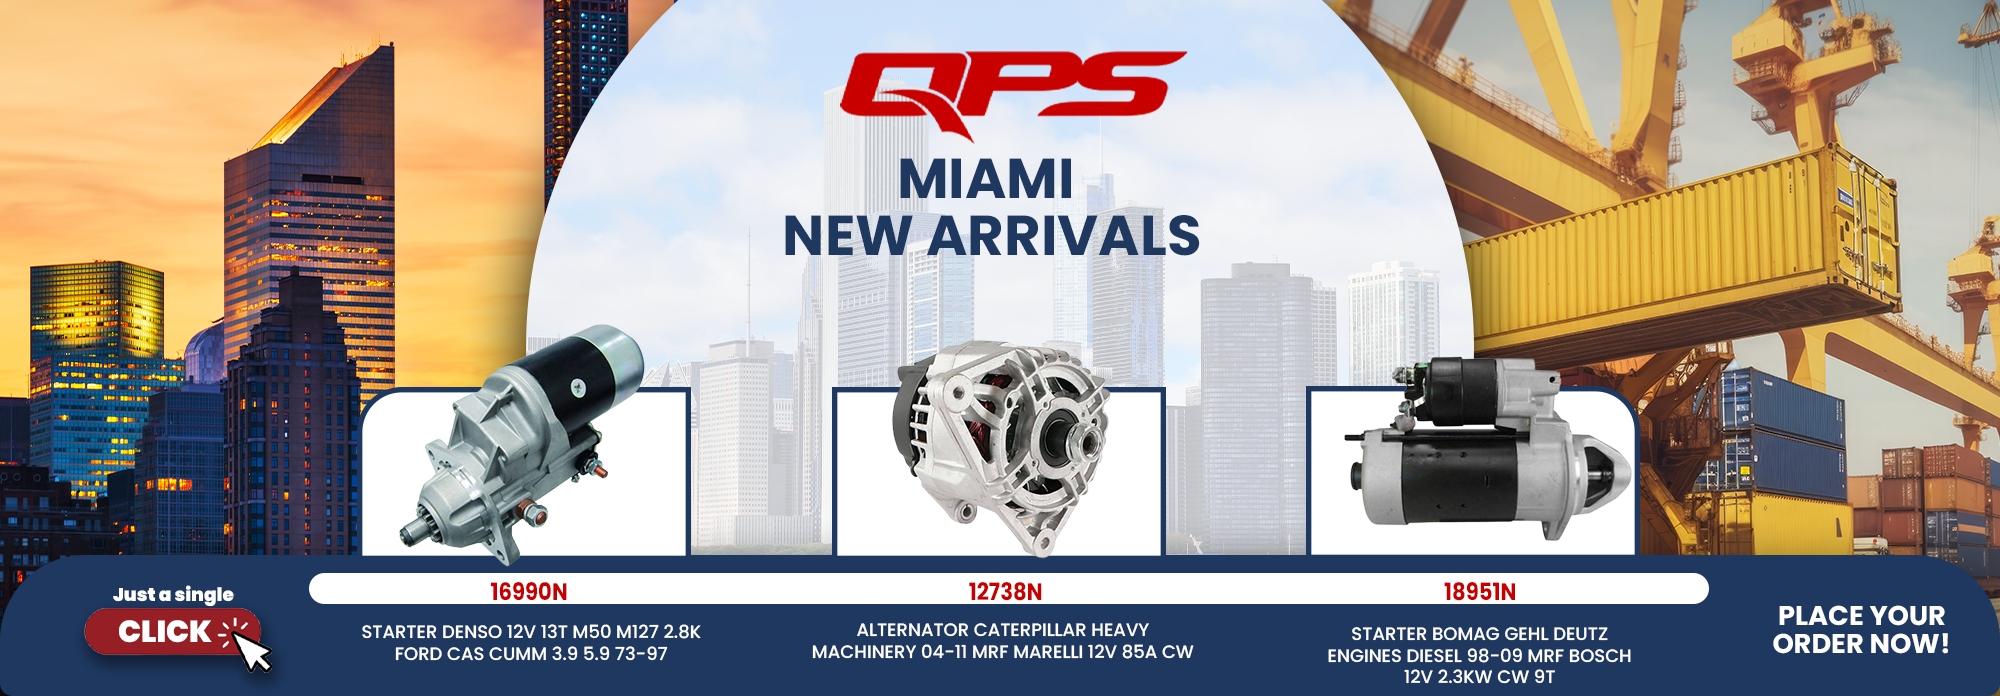 New Arrivals Miami